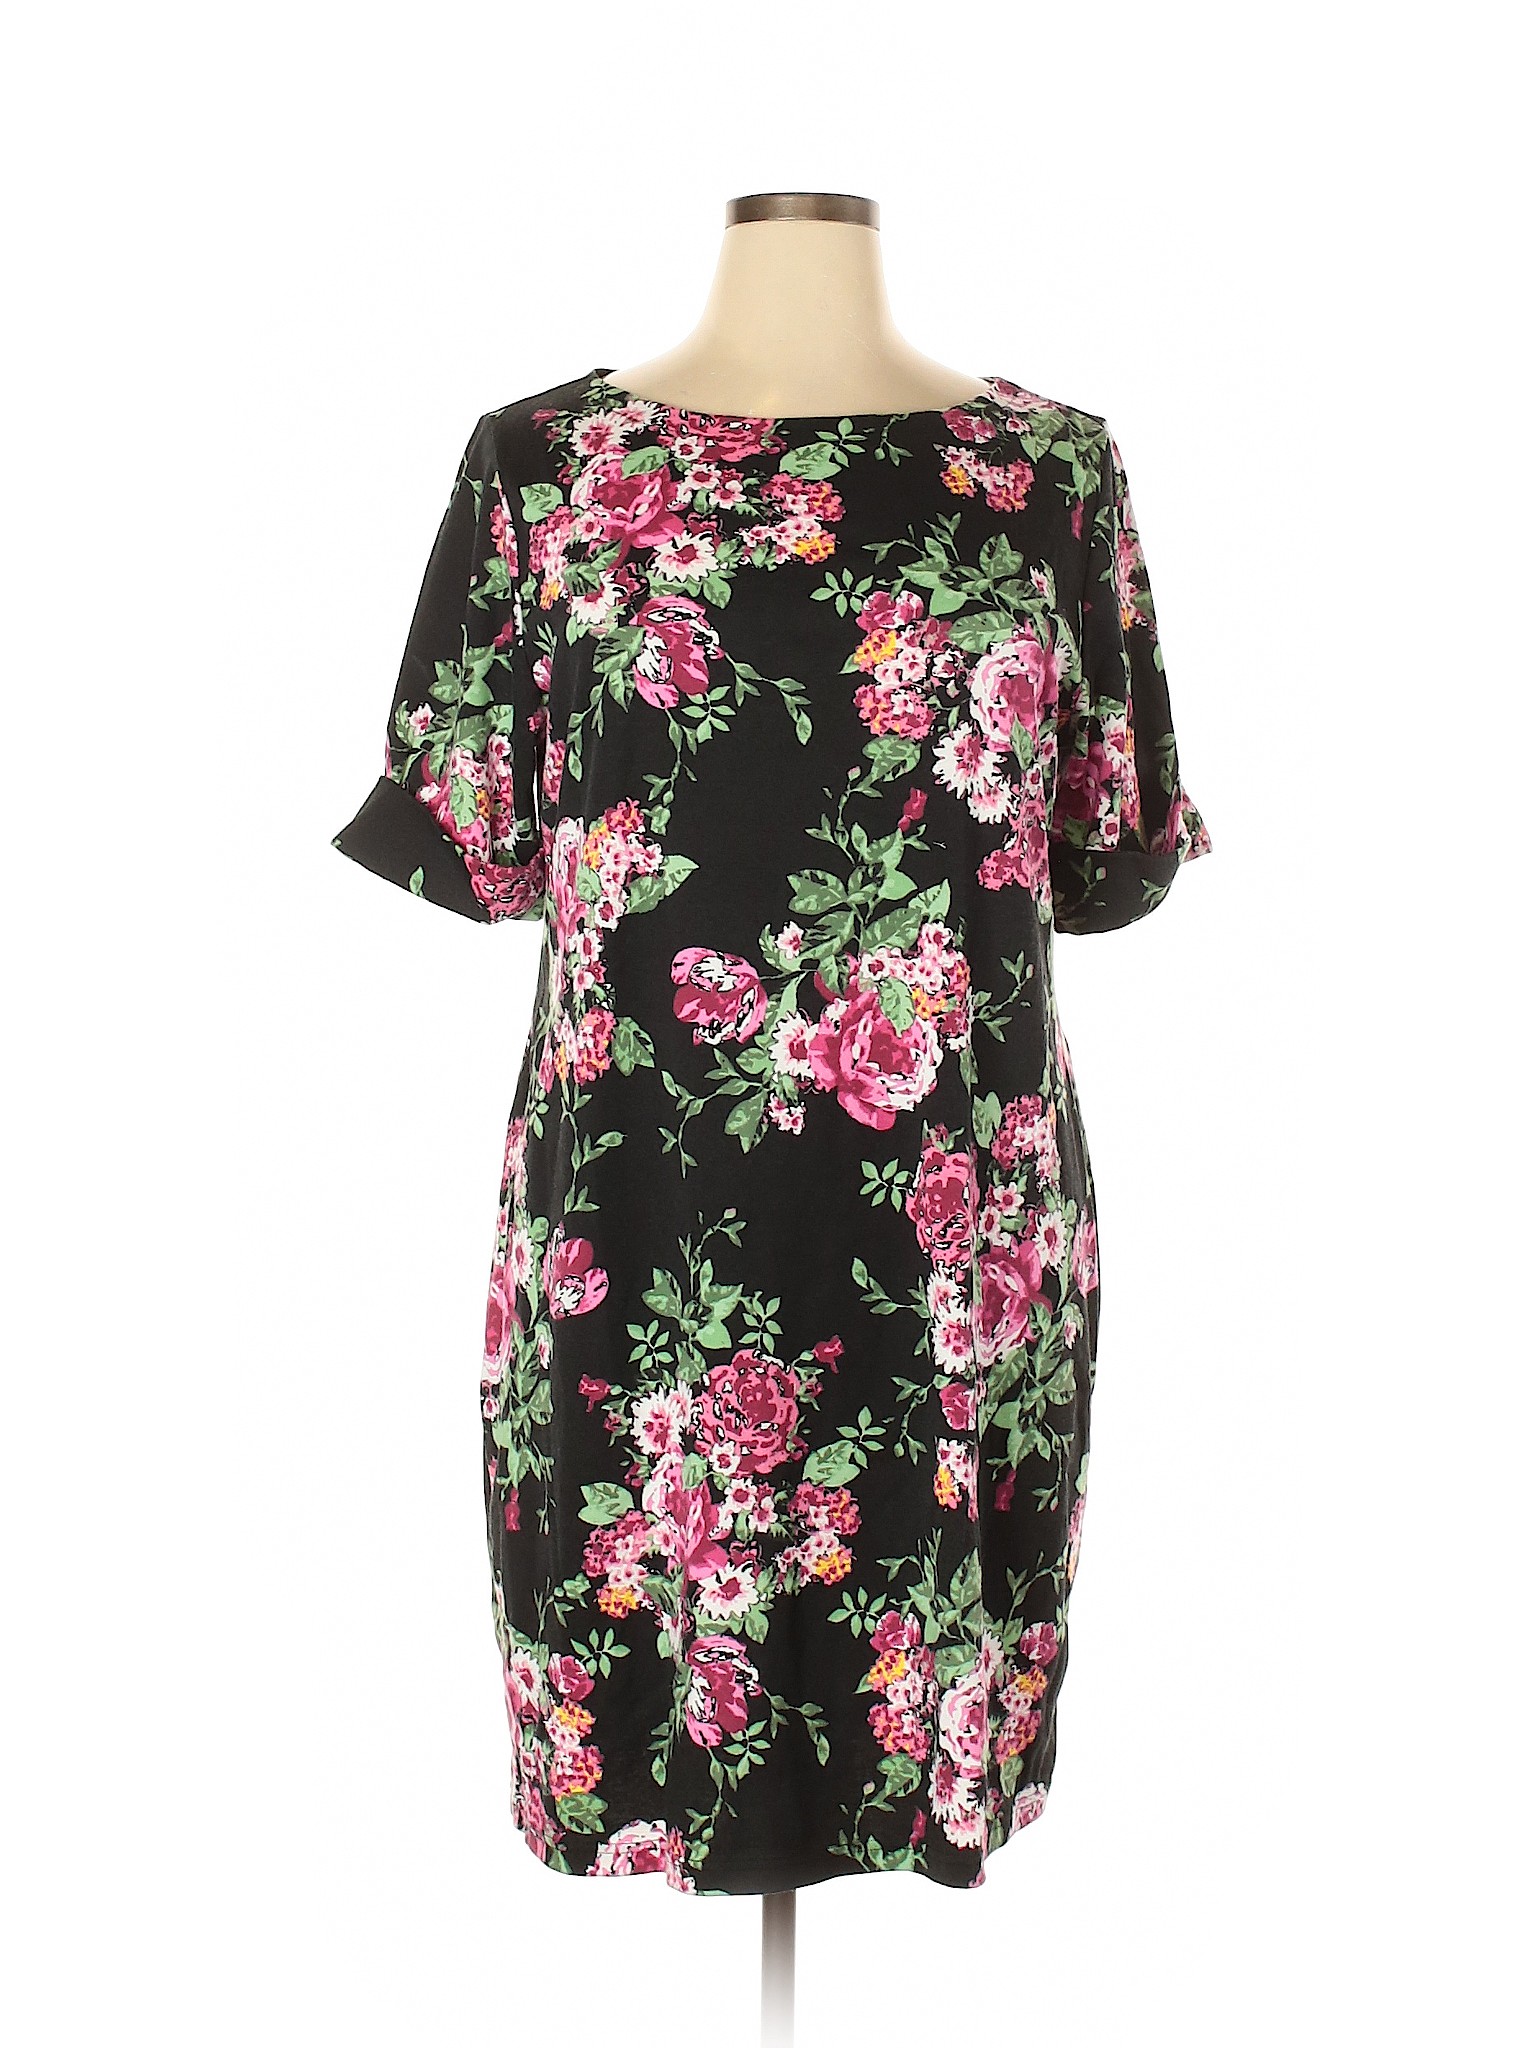 Karen Scott Floral Black Casual Dress Size 1X (Plus) - 75% off | thredUP